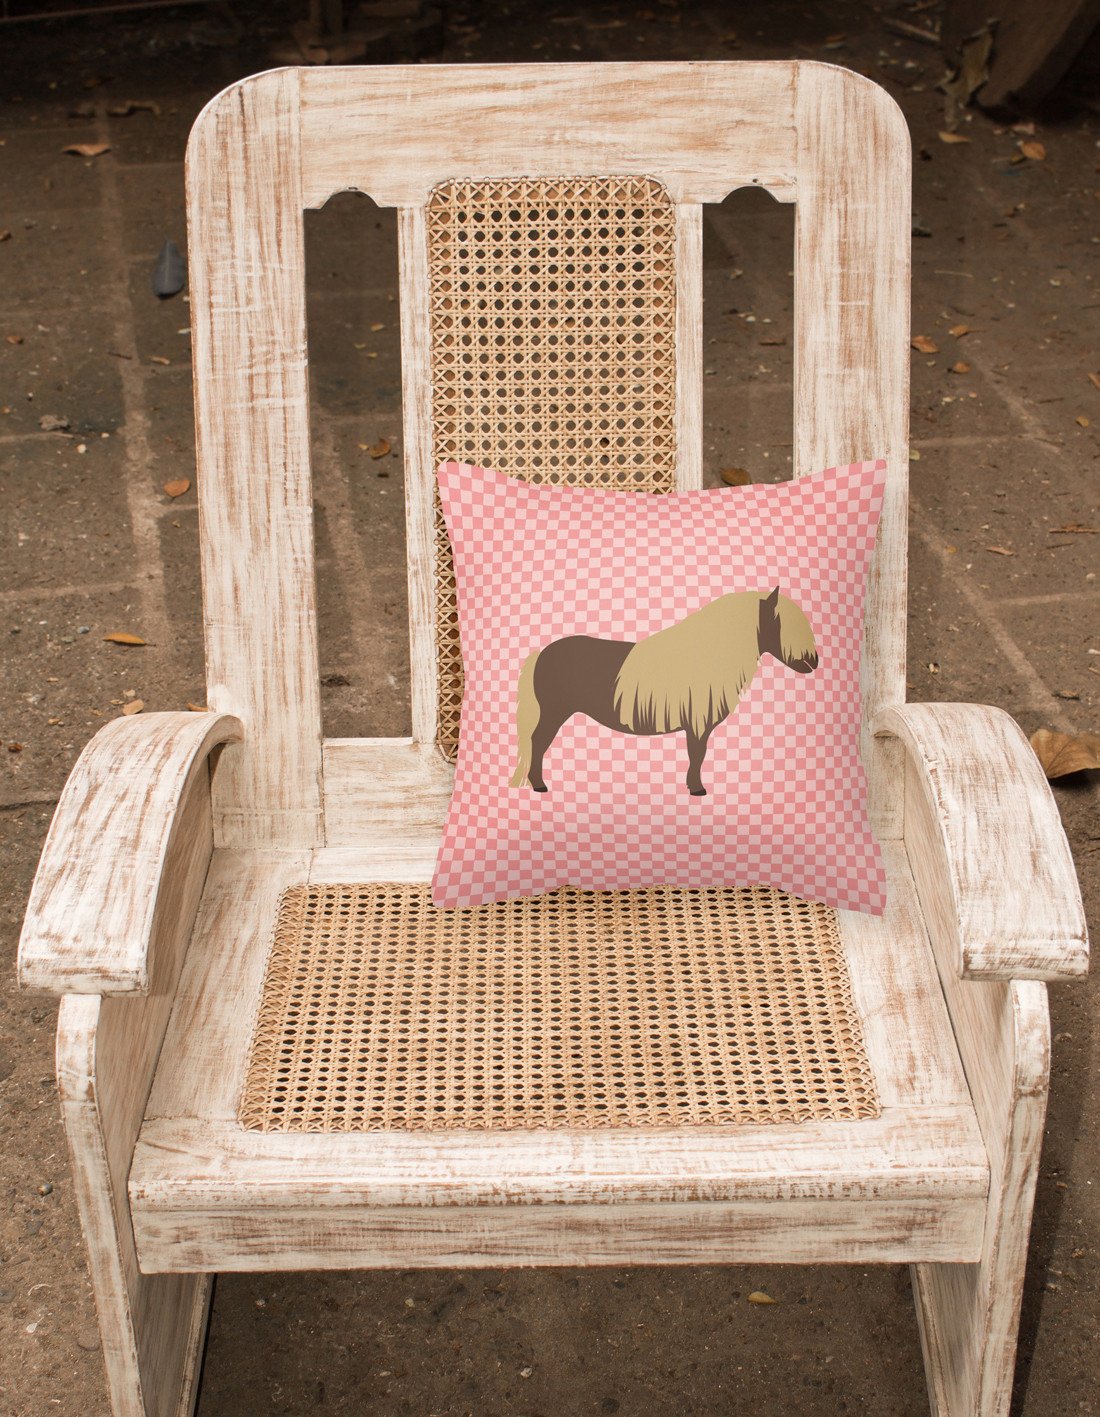 Shetland Pony Horse Pink Check Fabric Decorative Pillow BB7914PW1818 by Caroline's Treasures